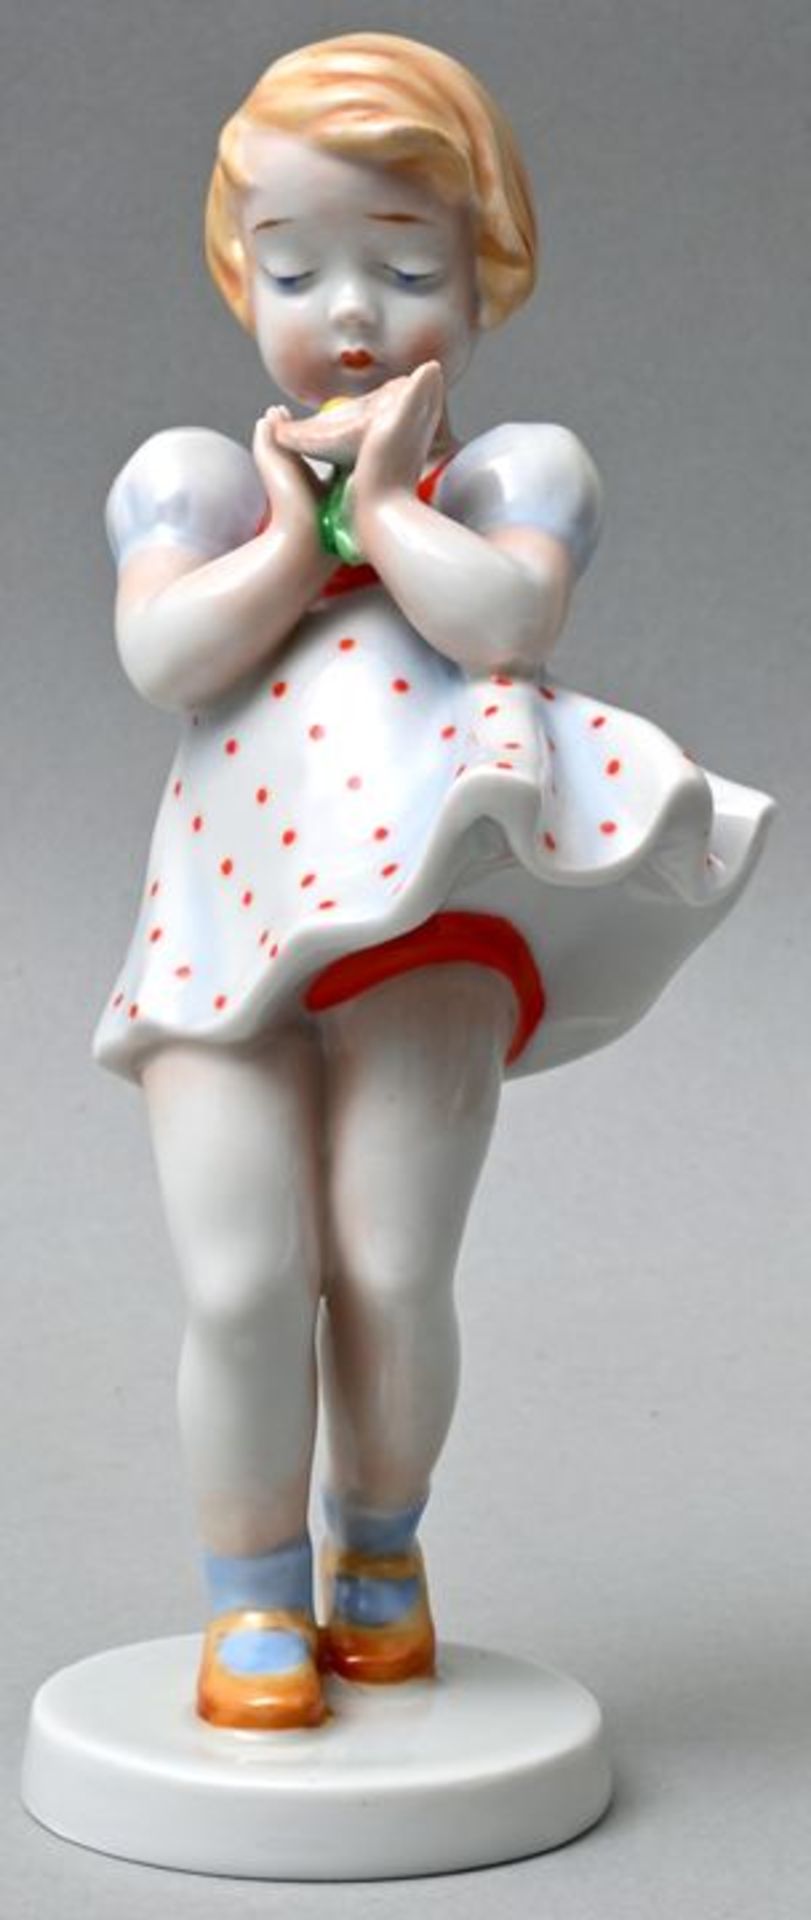 Vertikofigur Mädchen mit Blume / Porcelain figure